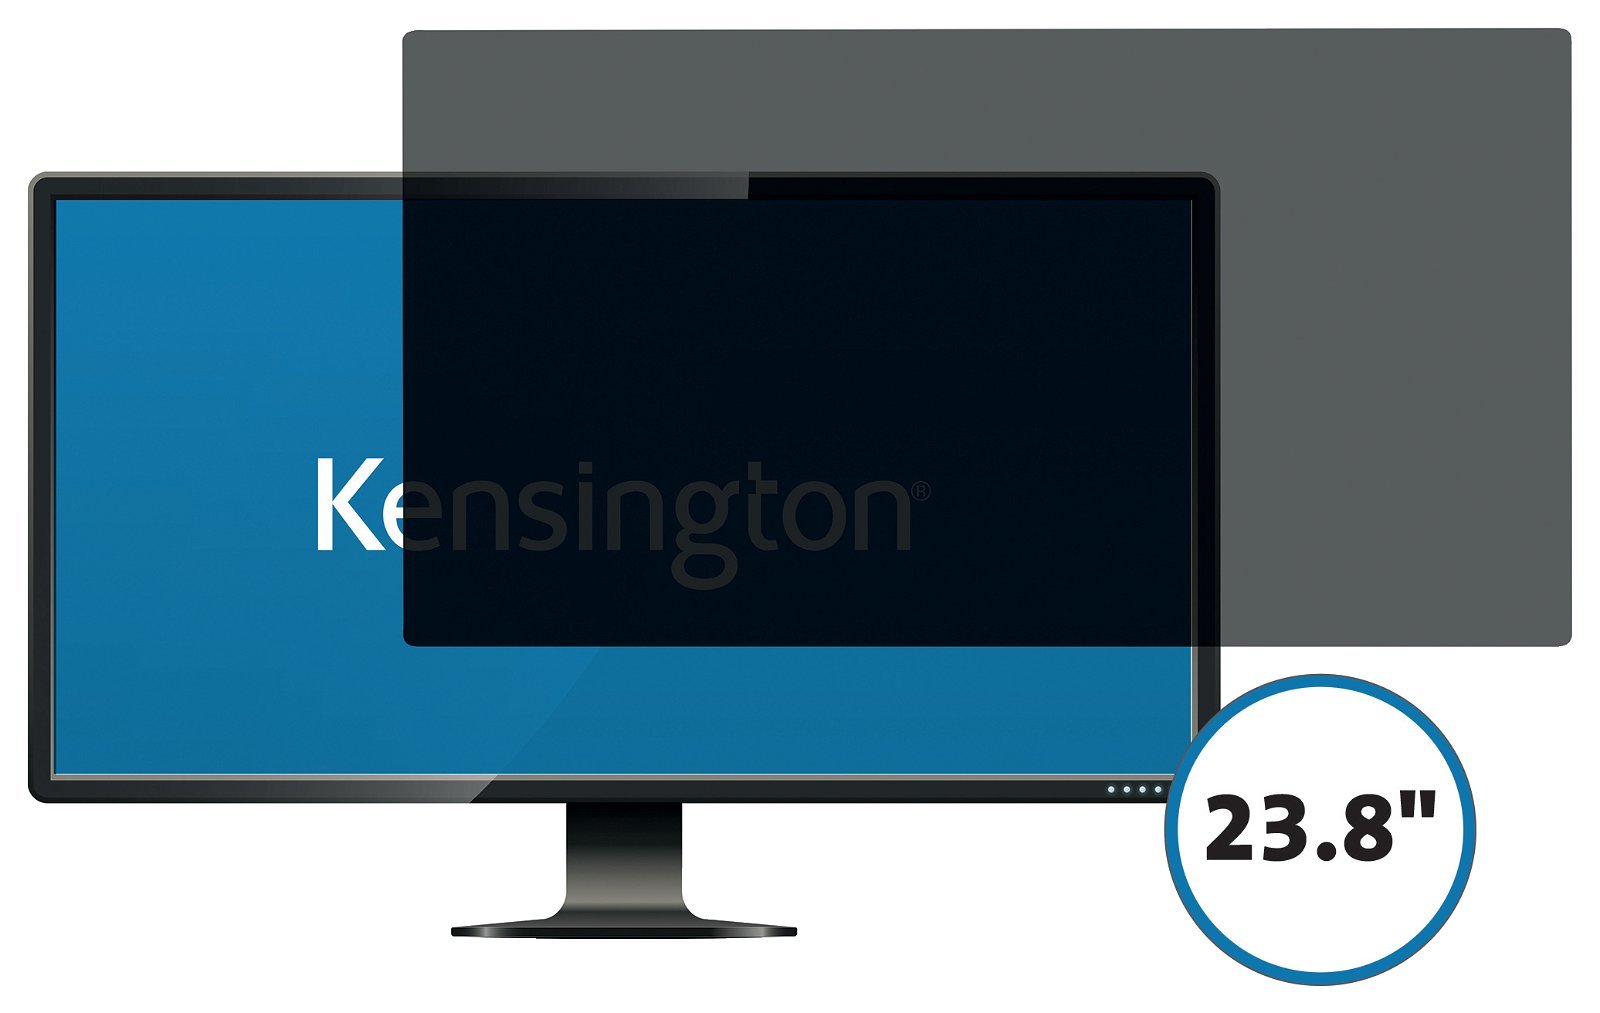 Kensington skærmfilter 23,8" 16:9 transparent